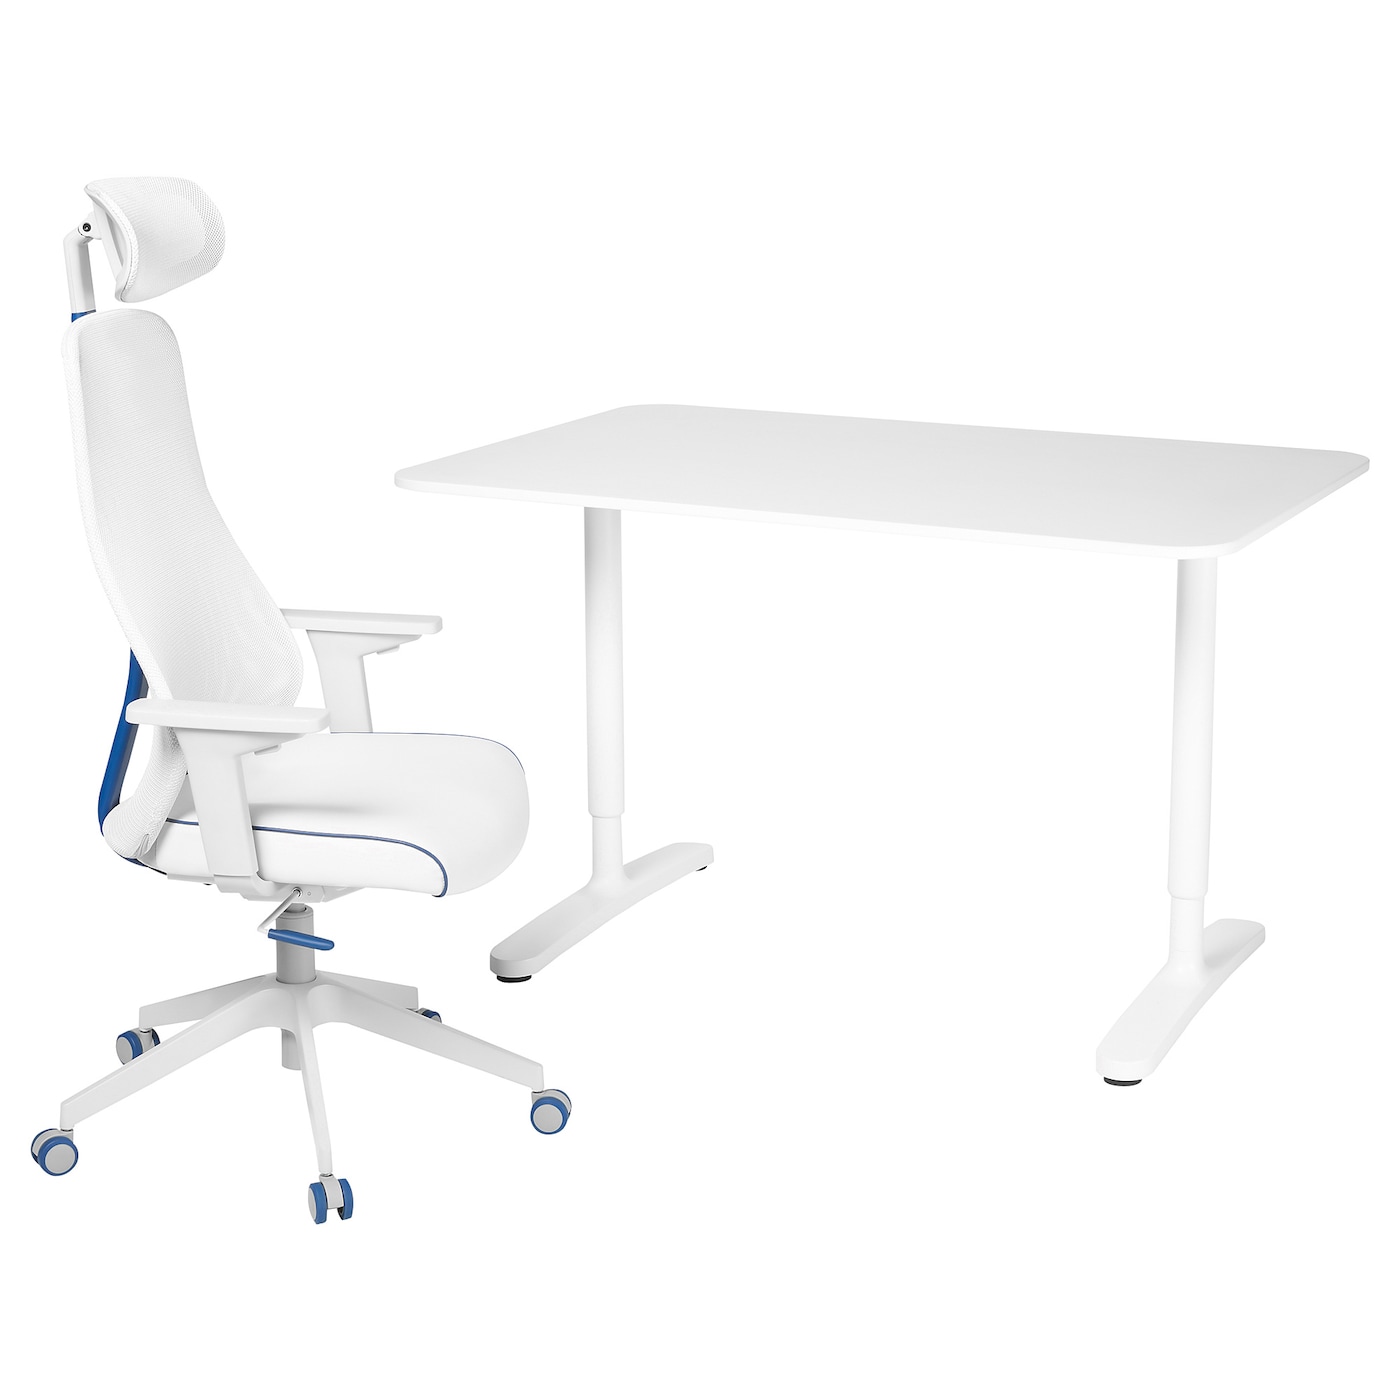 Стол и стул - IKEA BEKANT / MATCHSPEL, 120х80 см, белый/синий, БЕКАНТ/МАТЧСПЕЛ ИКЕА